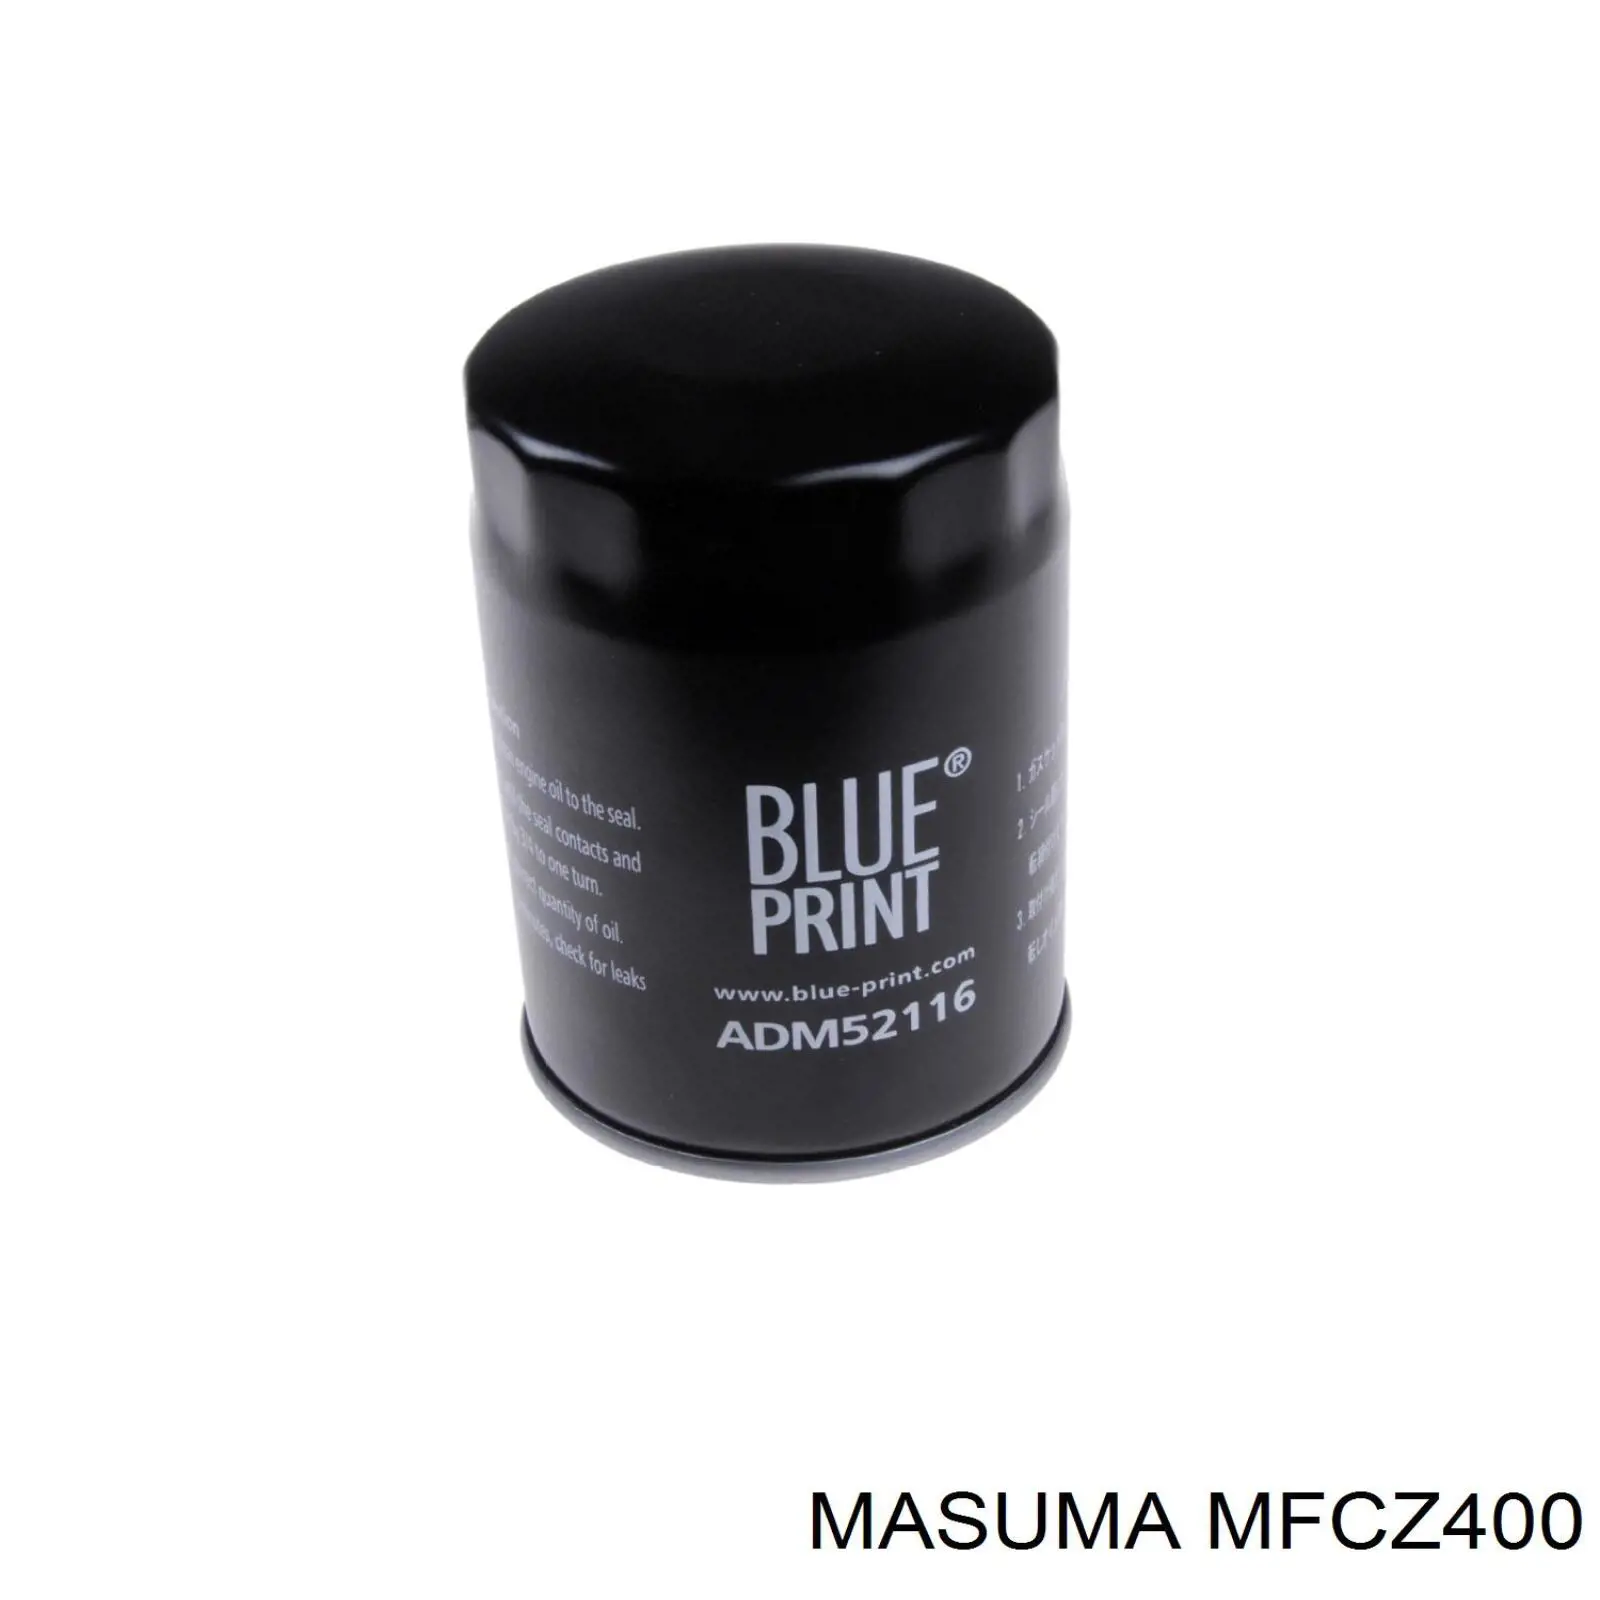 MFCZ400 Masuma filtro de aceite